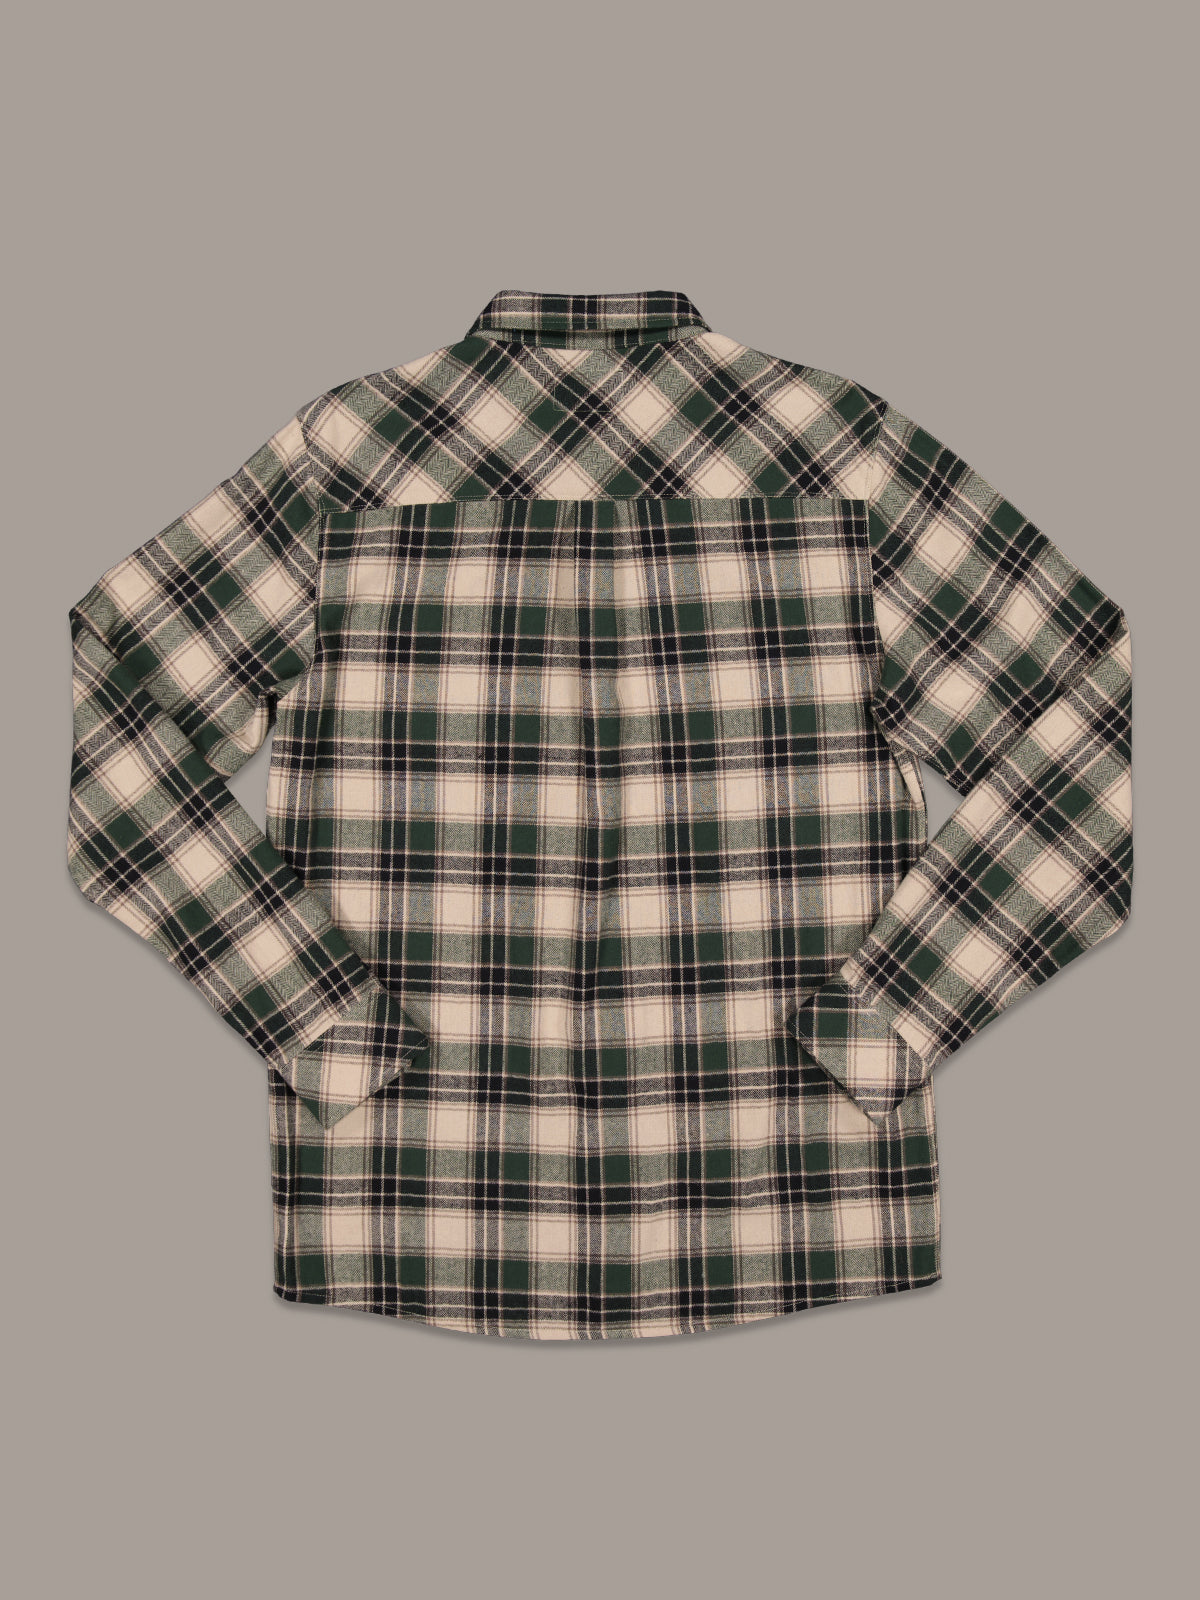 JAF // Boatyard Shirt PINE CHECK